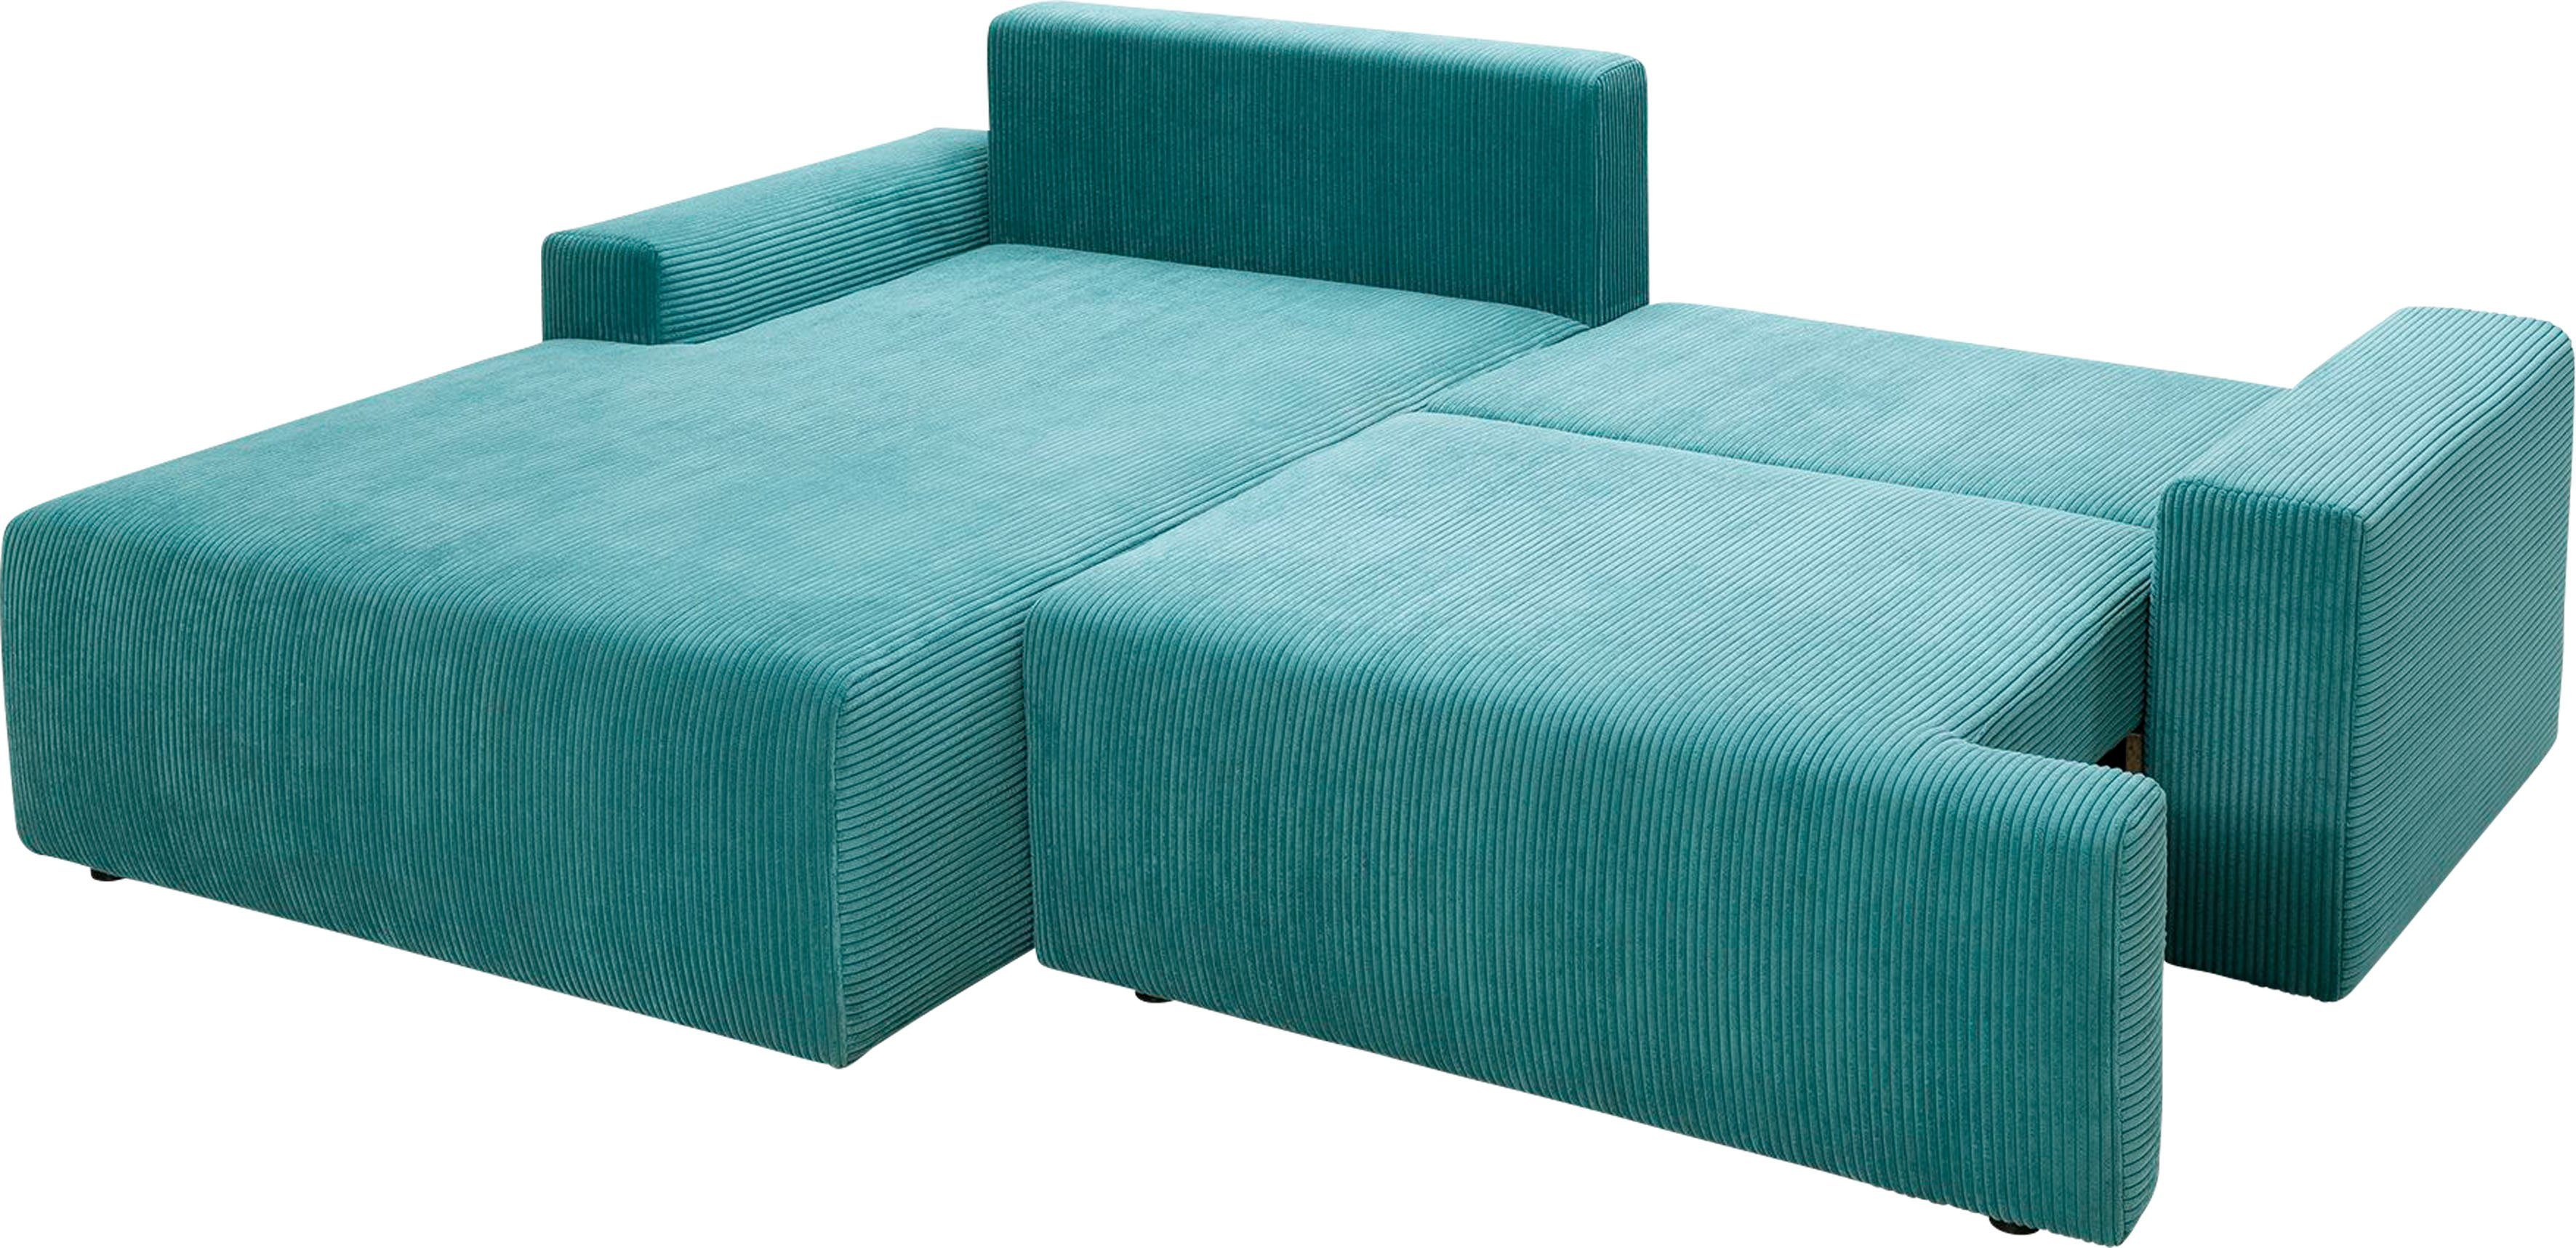 inklusive sofa verschiedenen Cord-Farben - Orinoko, und fashion exxpo Ecksofa sky Bettfunktion in Bettkasten